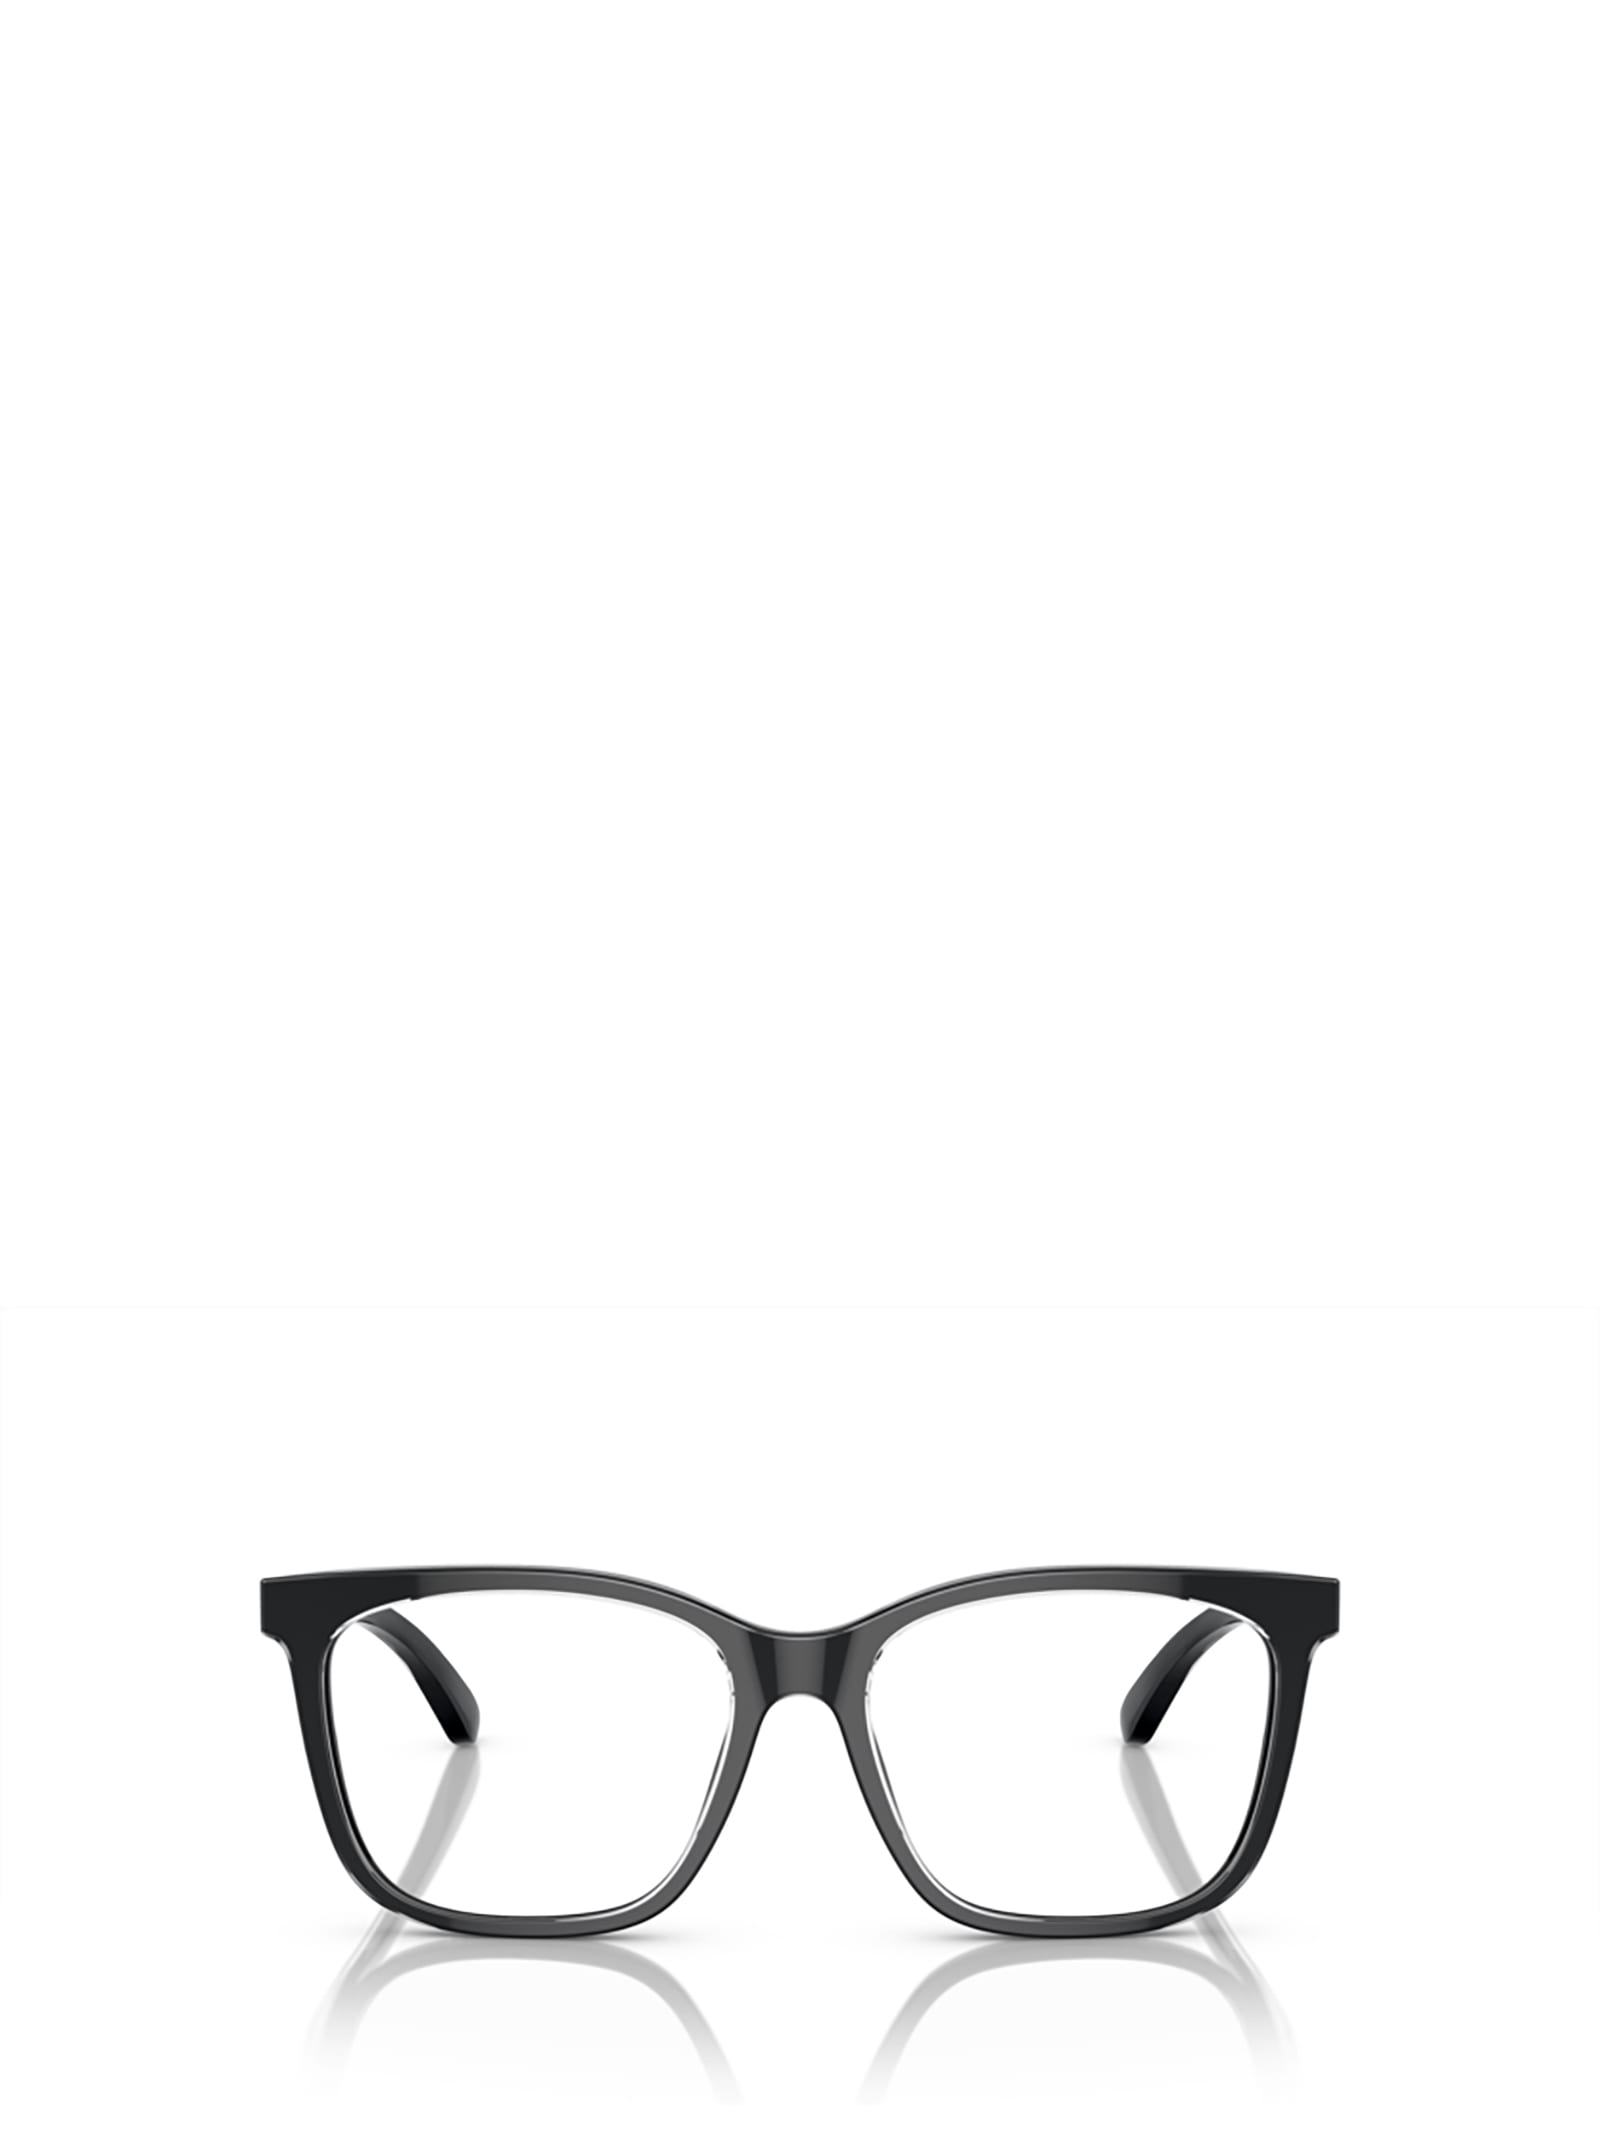 Emporio Armani Ea3228 Shiny Black / Top Crystal Glasses